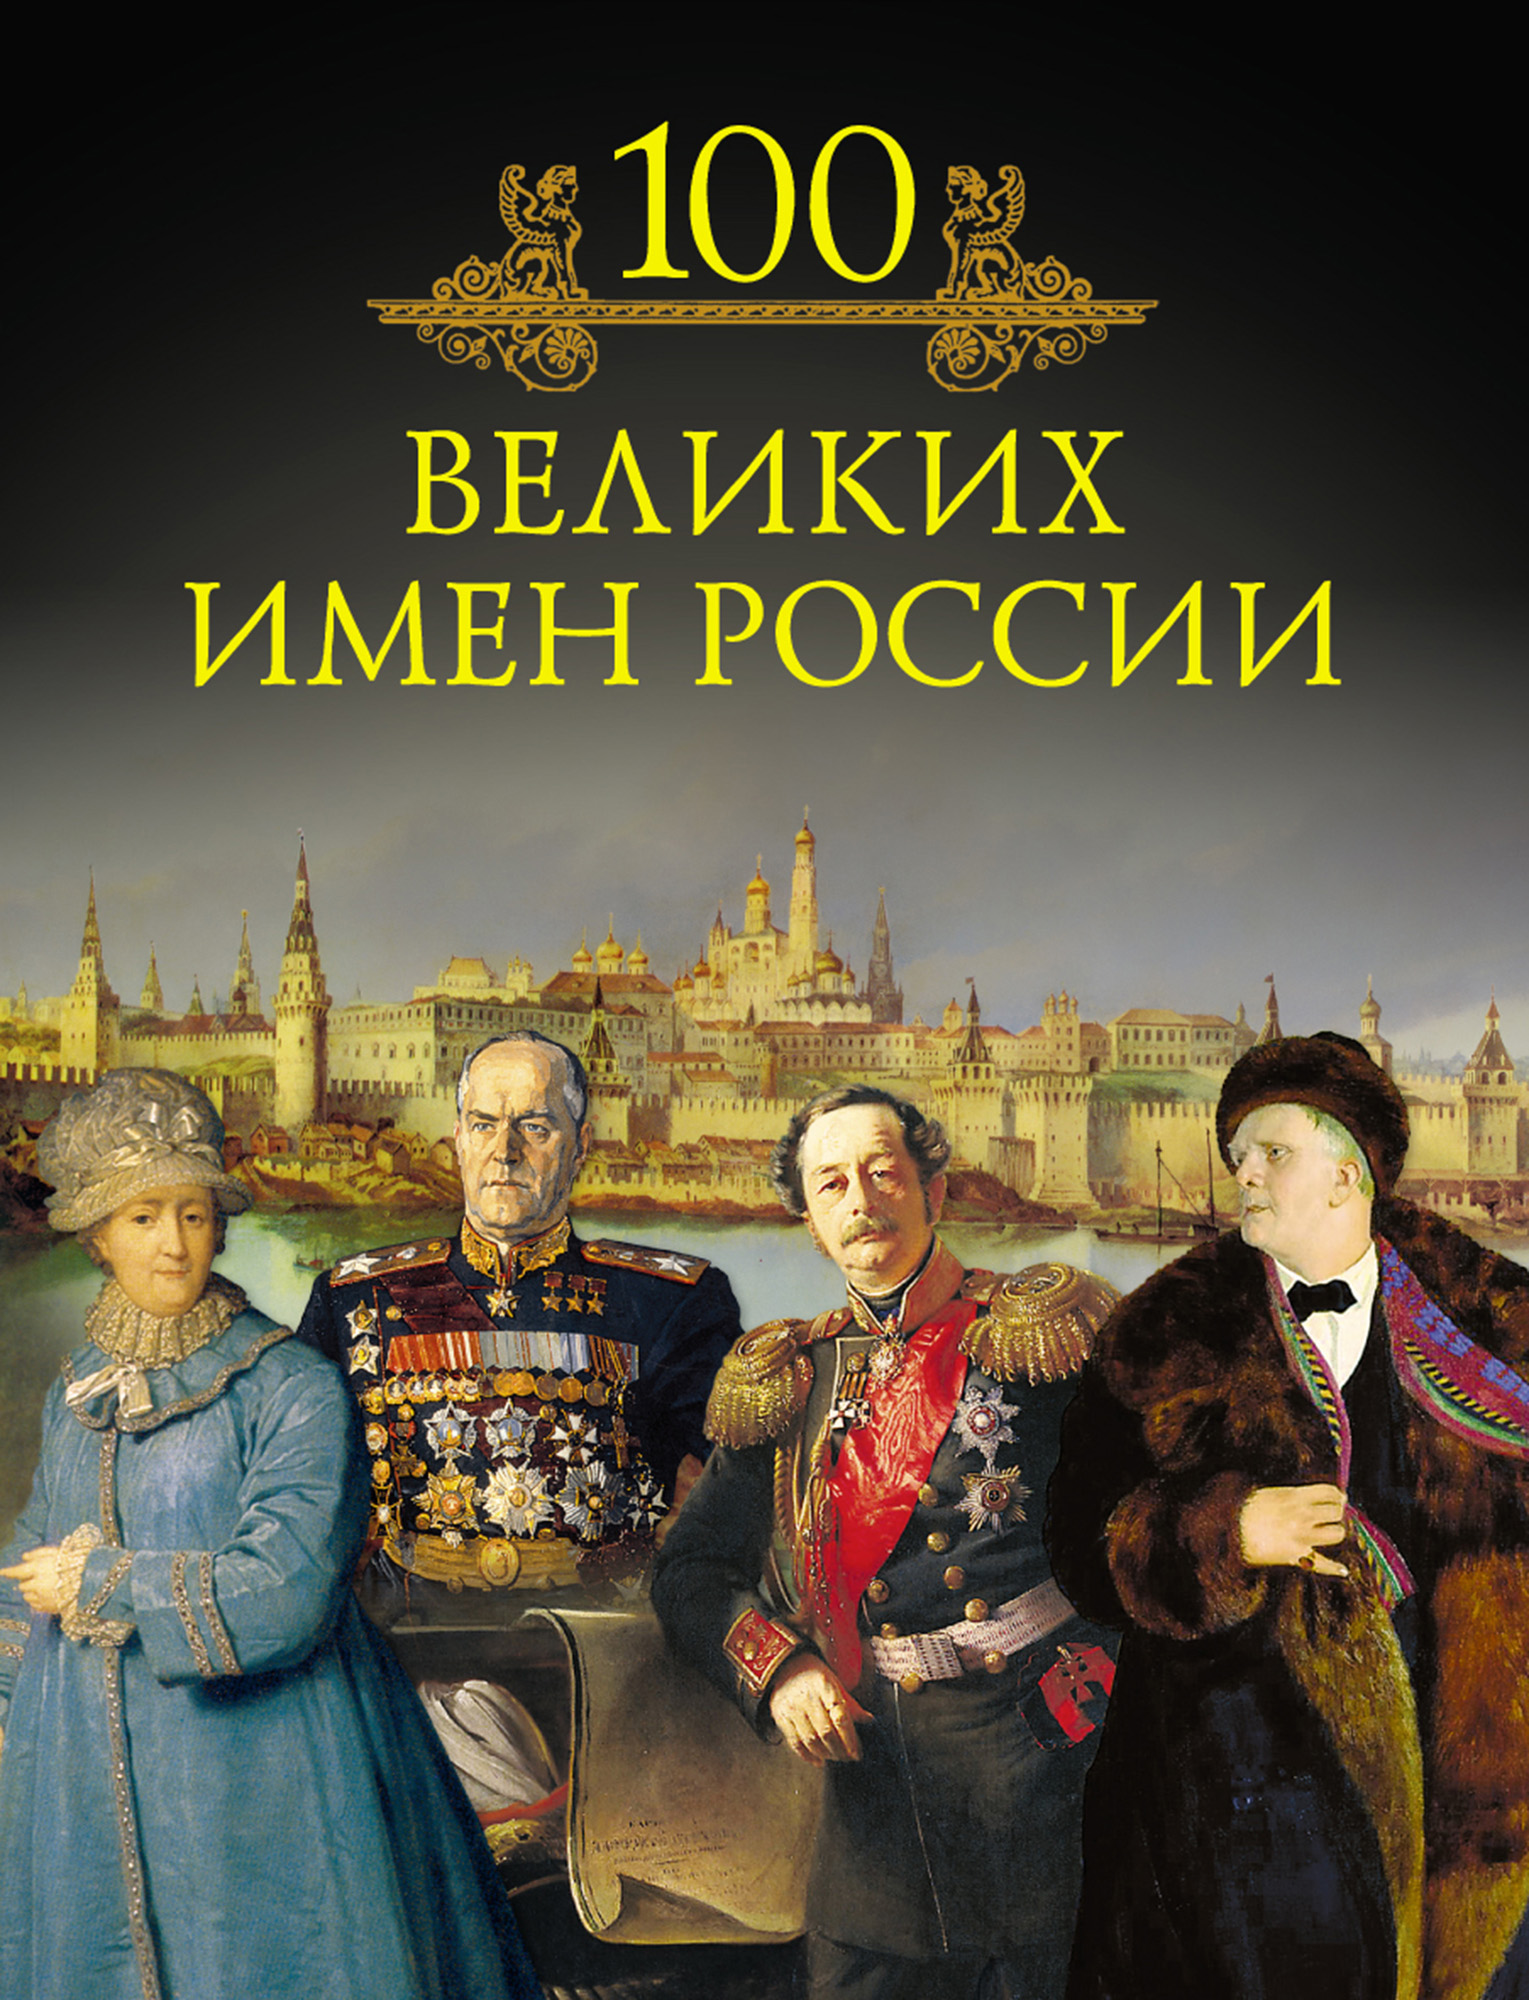 Через великие книги. 100 Великих имен. Книга 100 великих имен. Великие имена России книга.